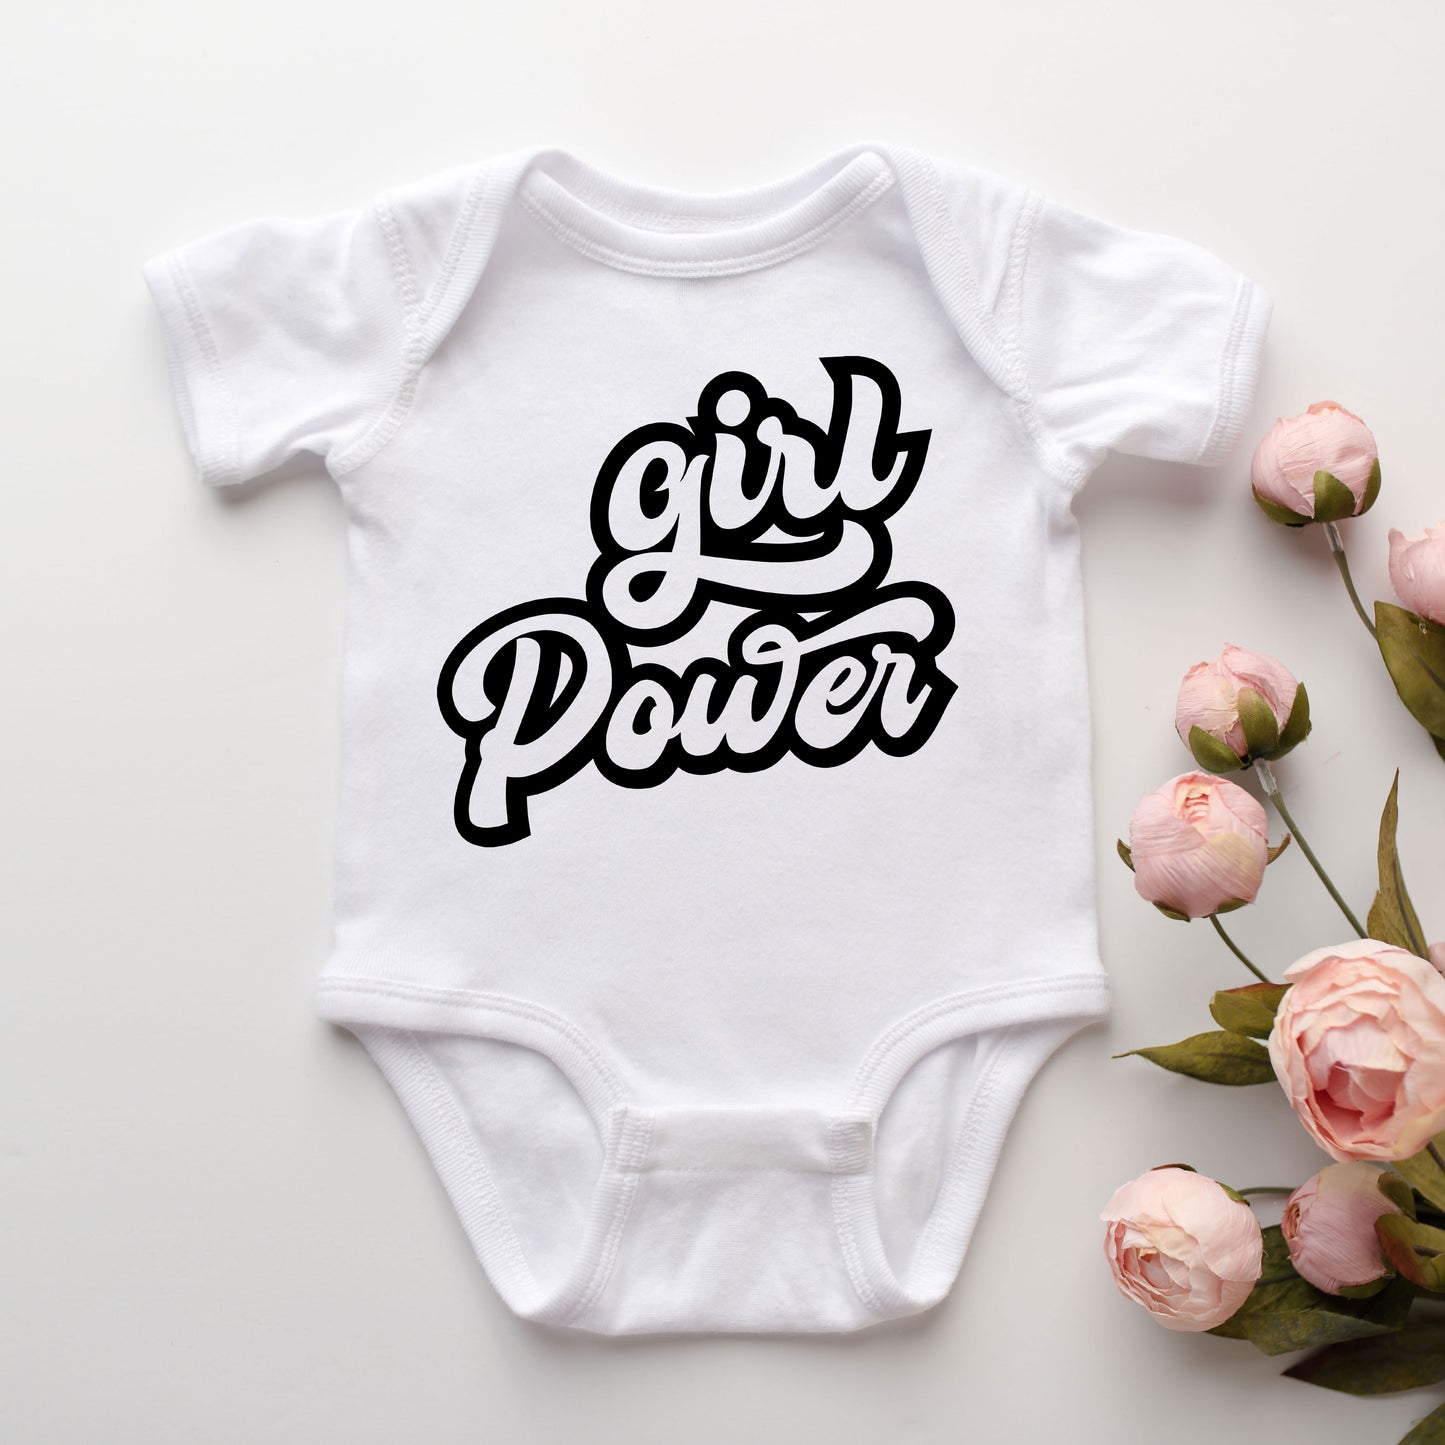 Retro Girl Power | Baby Graphic Short Sleeve Onesie